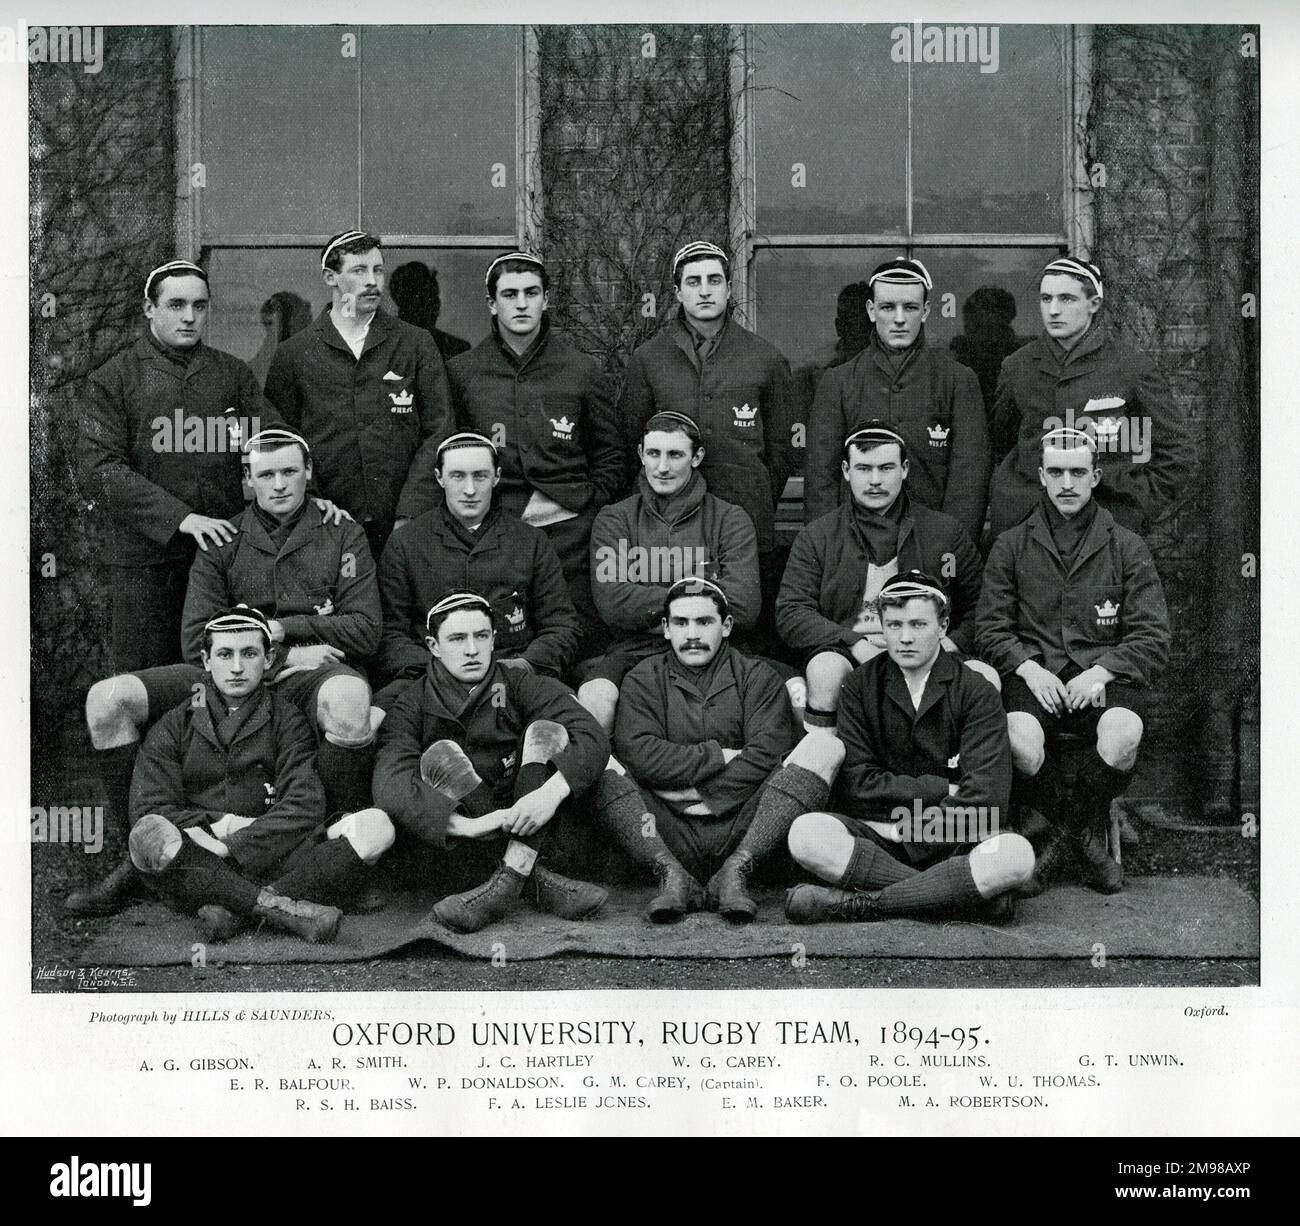 Oxford University Rugby Team, 1894-95: Gibson, Smith, Hartley, Carey, Mullins, Unwin, Balfour, Donaldson, Carey (Captain), Poole, Thomas, Baiss, Leslie Jones, Baker, Robertson. Stock Photo